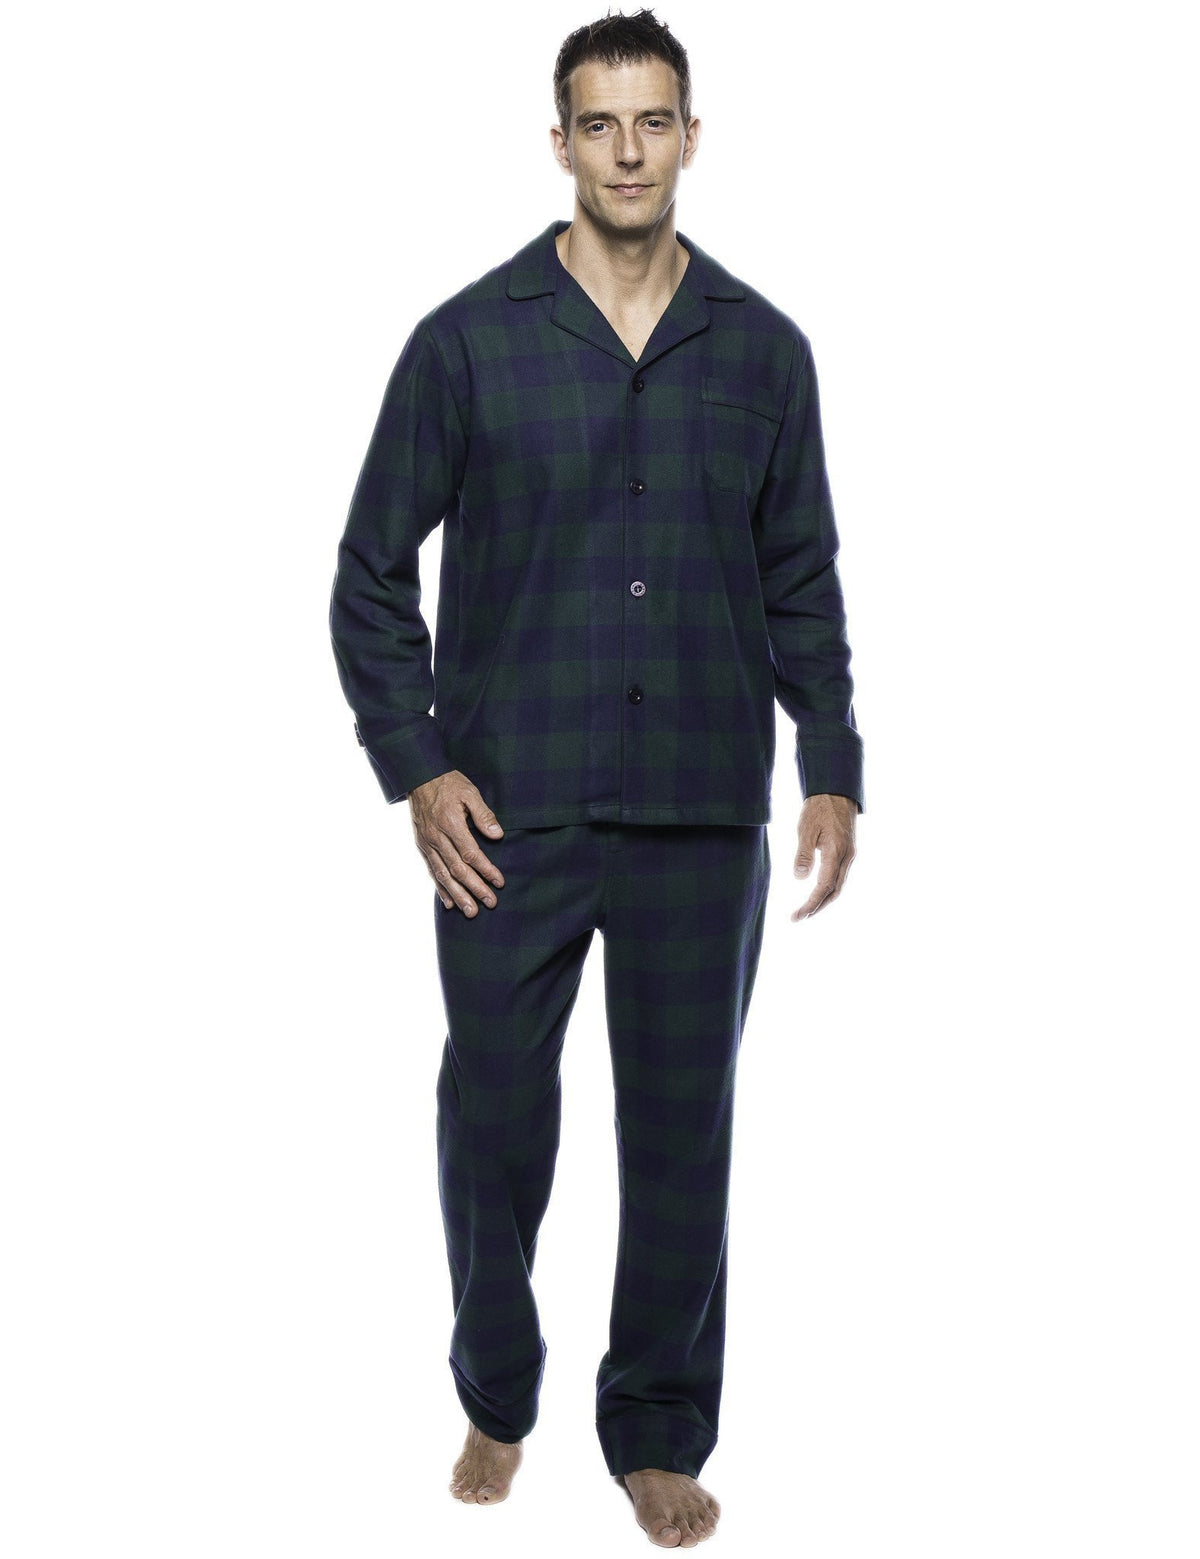 Box Packaged Men's Premium 100% Cotton Flannel Pajama Sleepwear Set - Gingham Green/Navy